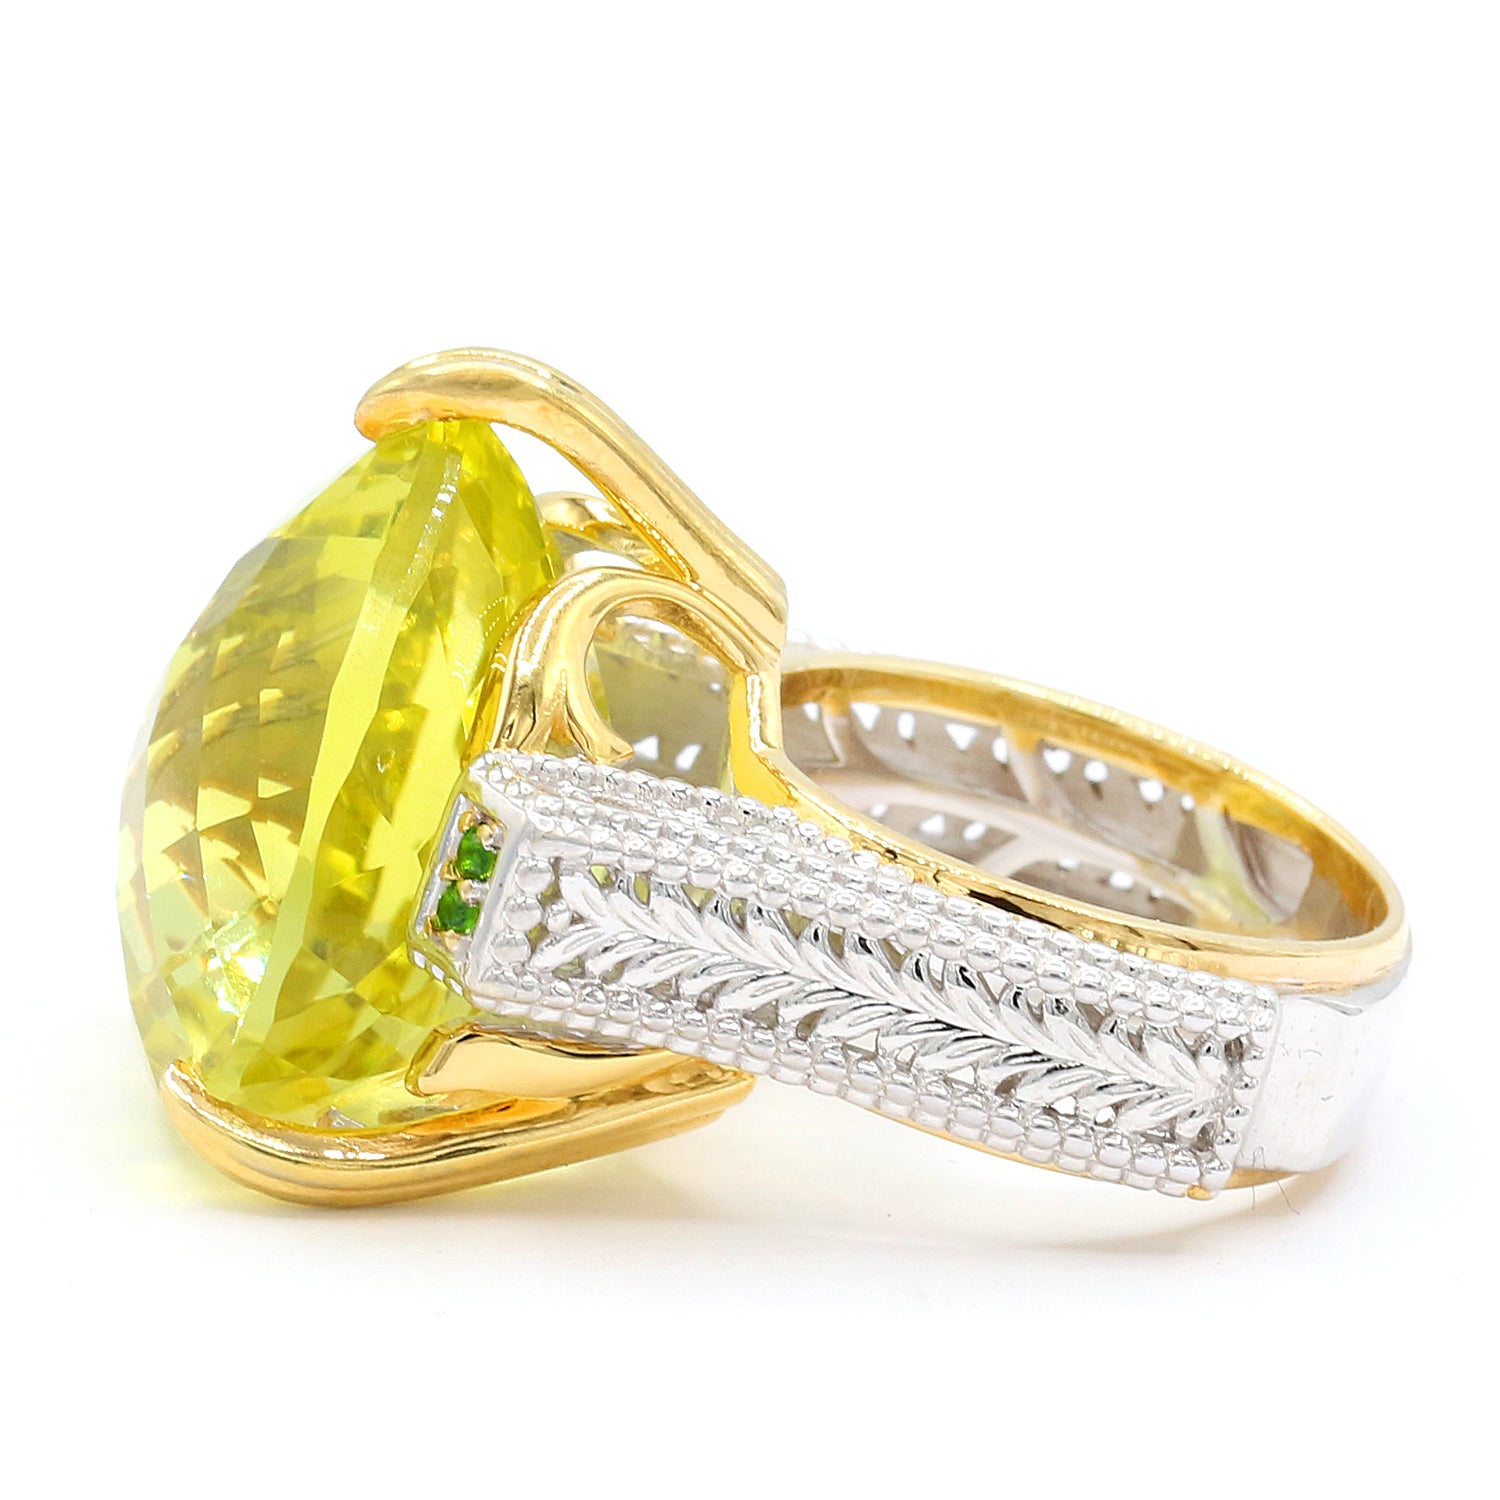 Gems en Vogue 27.04ctw Ouro Verde & Chrome Diopside Heart Honker Ring